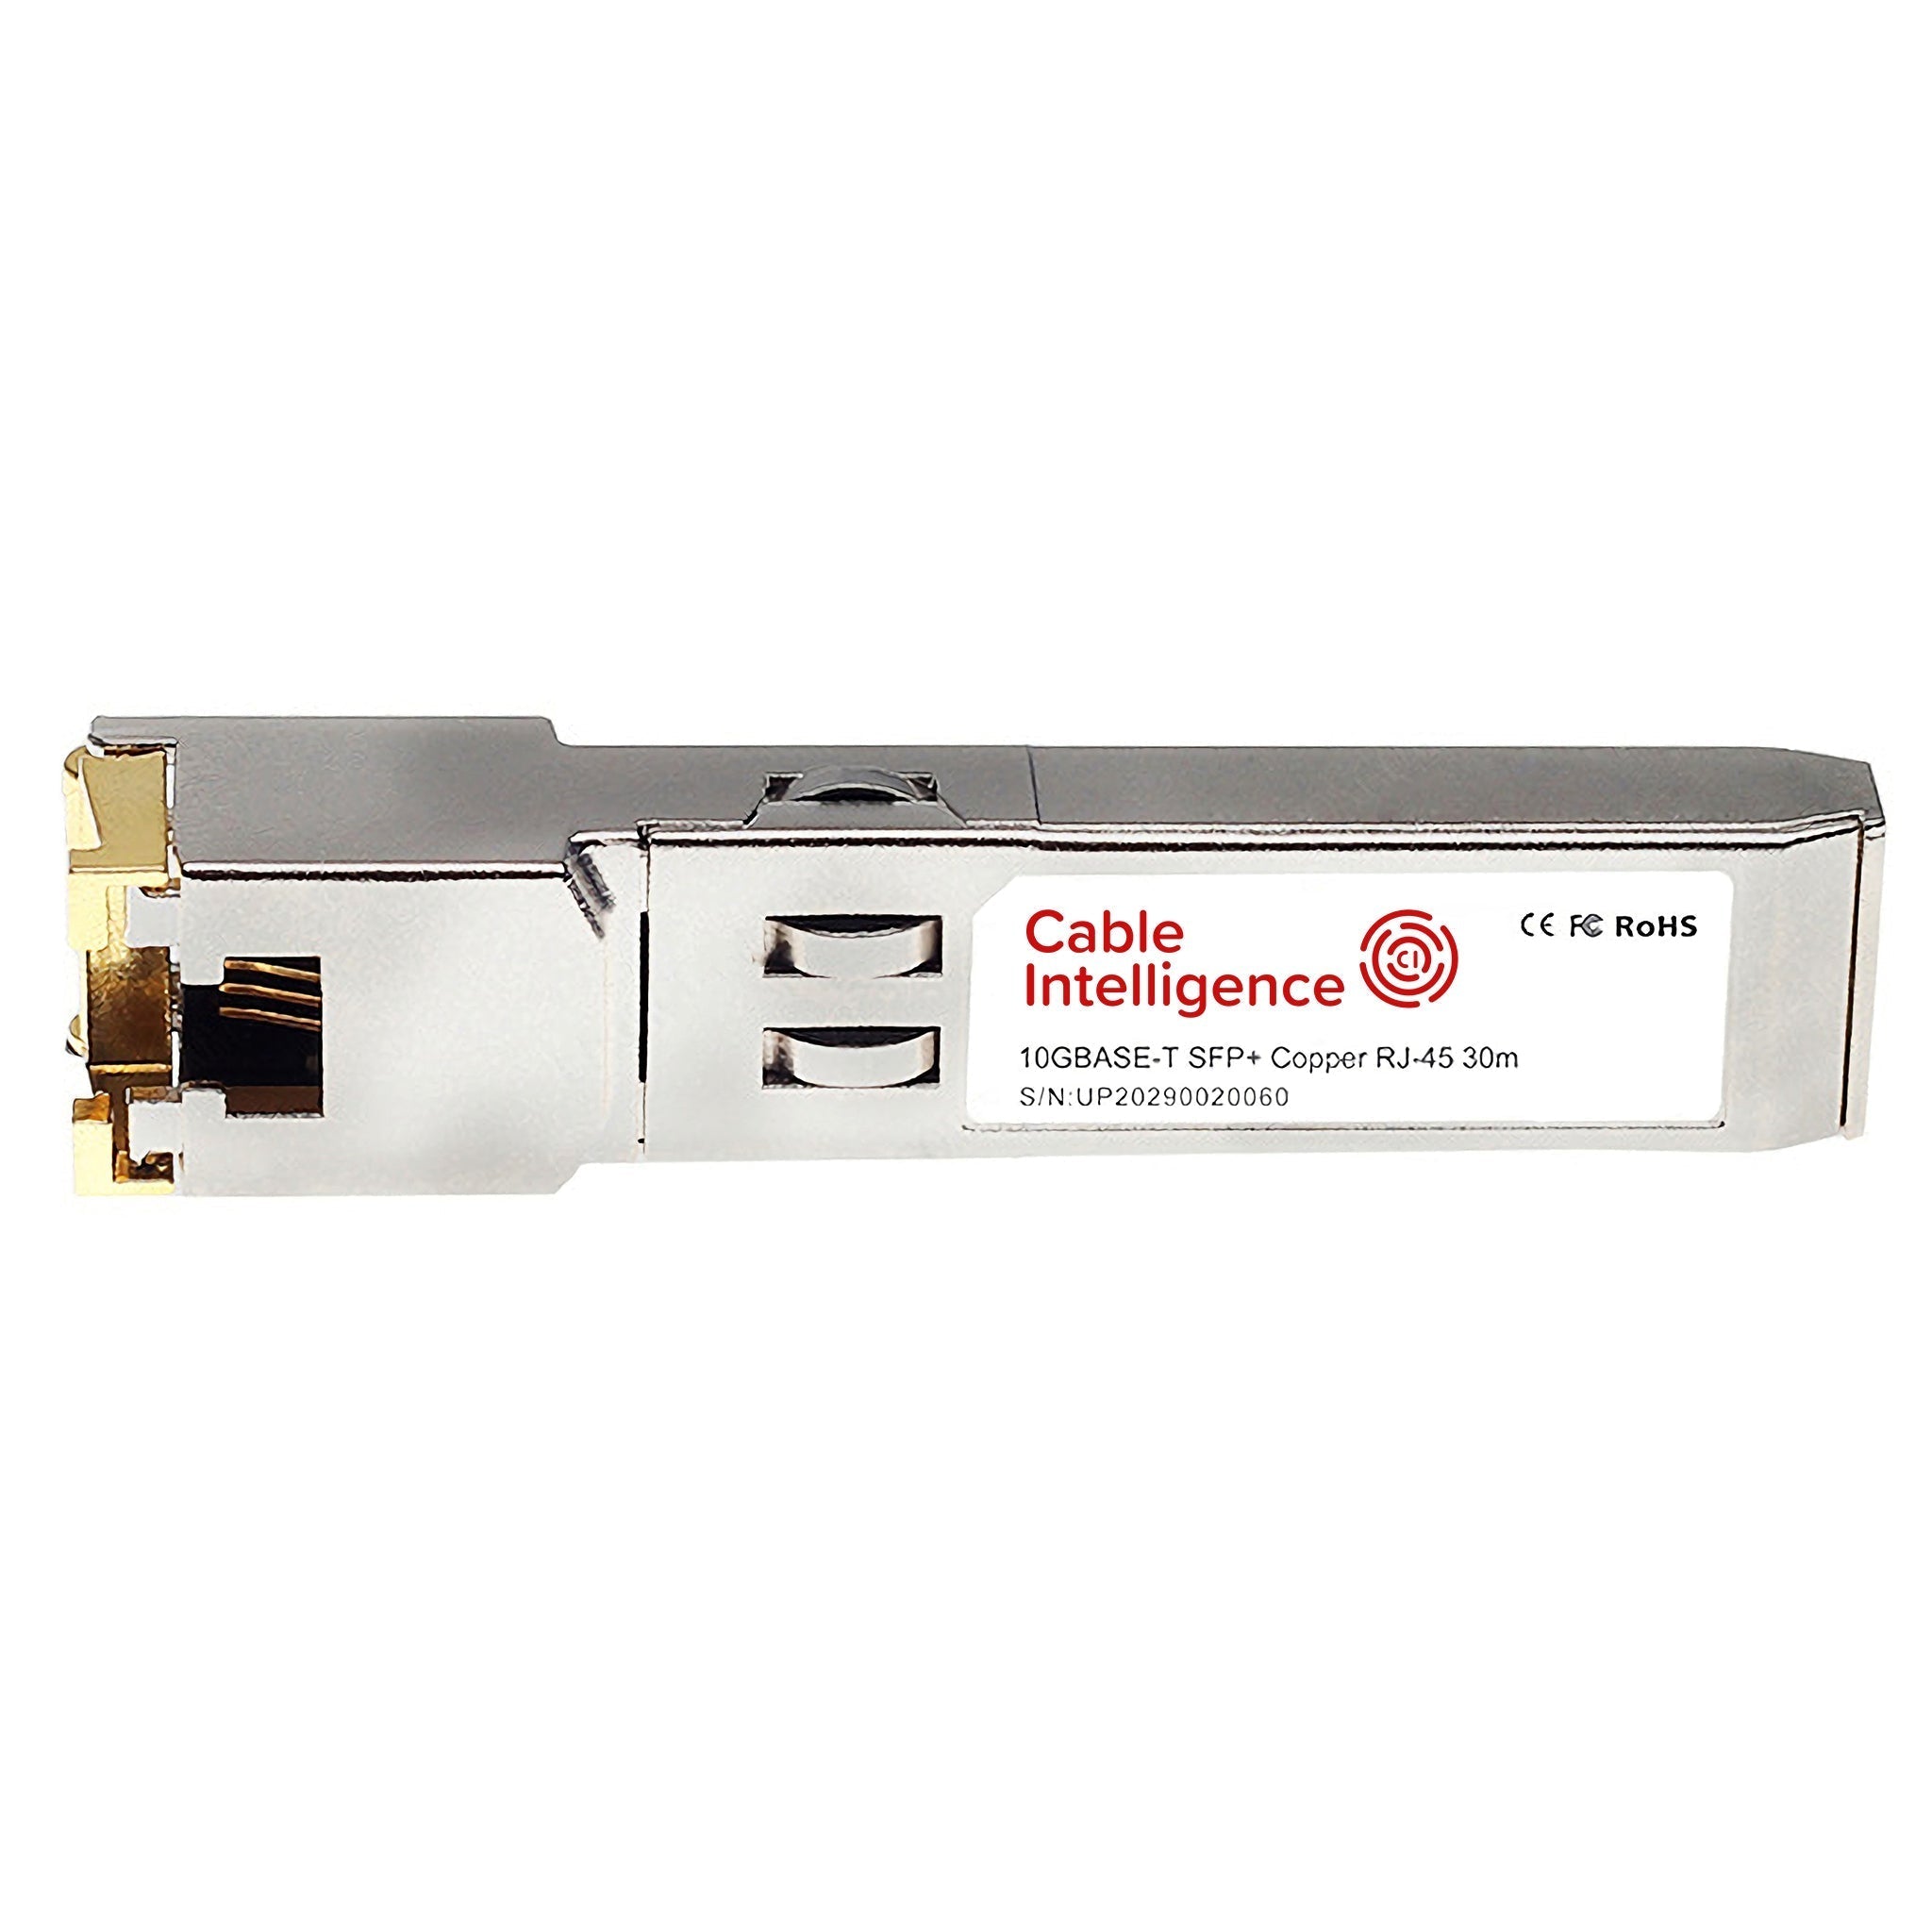 MA-SFP-10GB-T Cisco Meraki Compatible SFP+ Transceiver Cable Intelligence